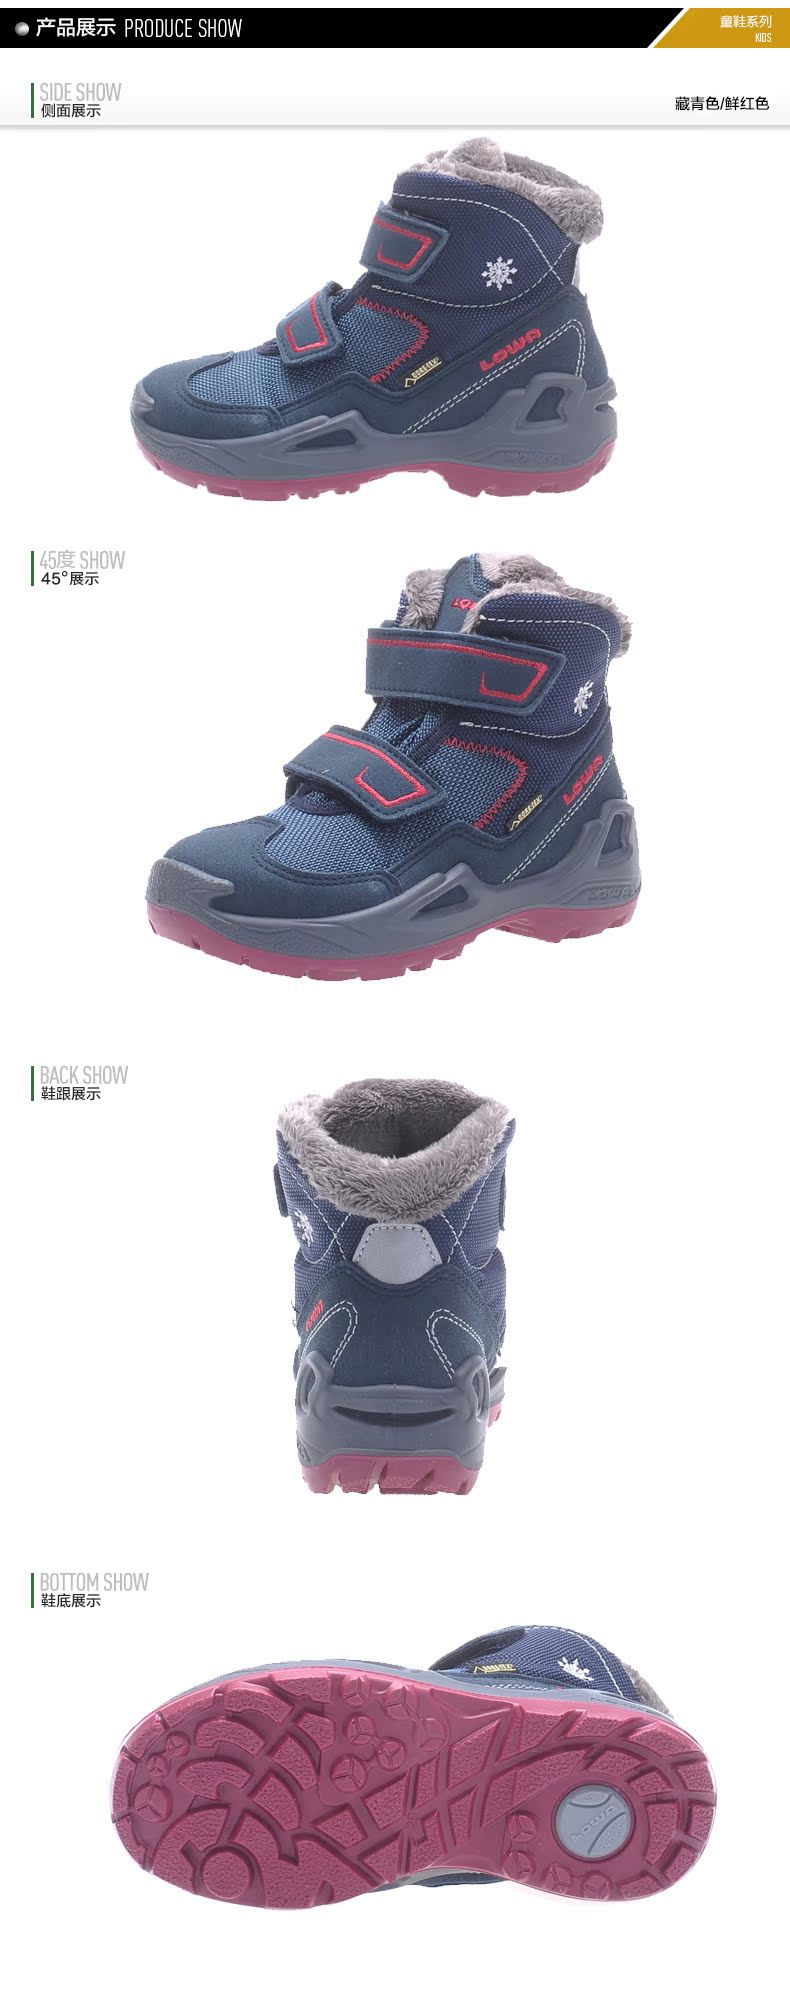 Chaussures de neige LOWA - Ref 1068742 Image 10